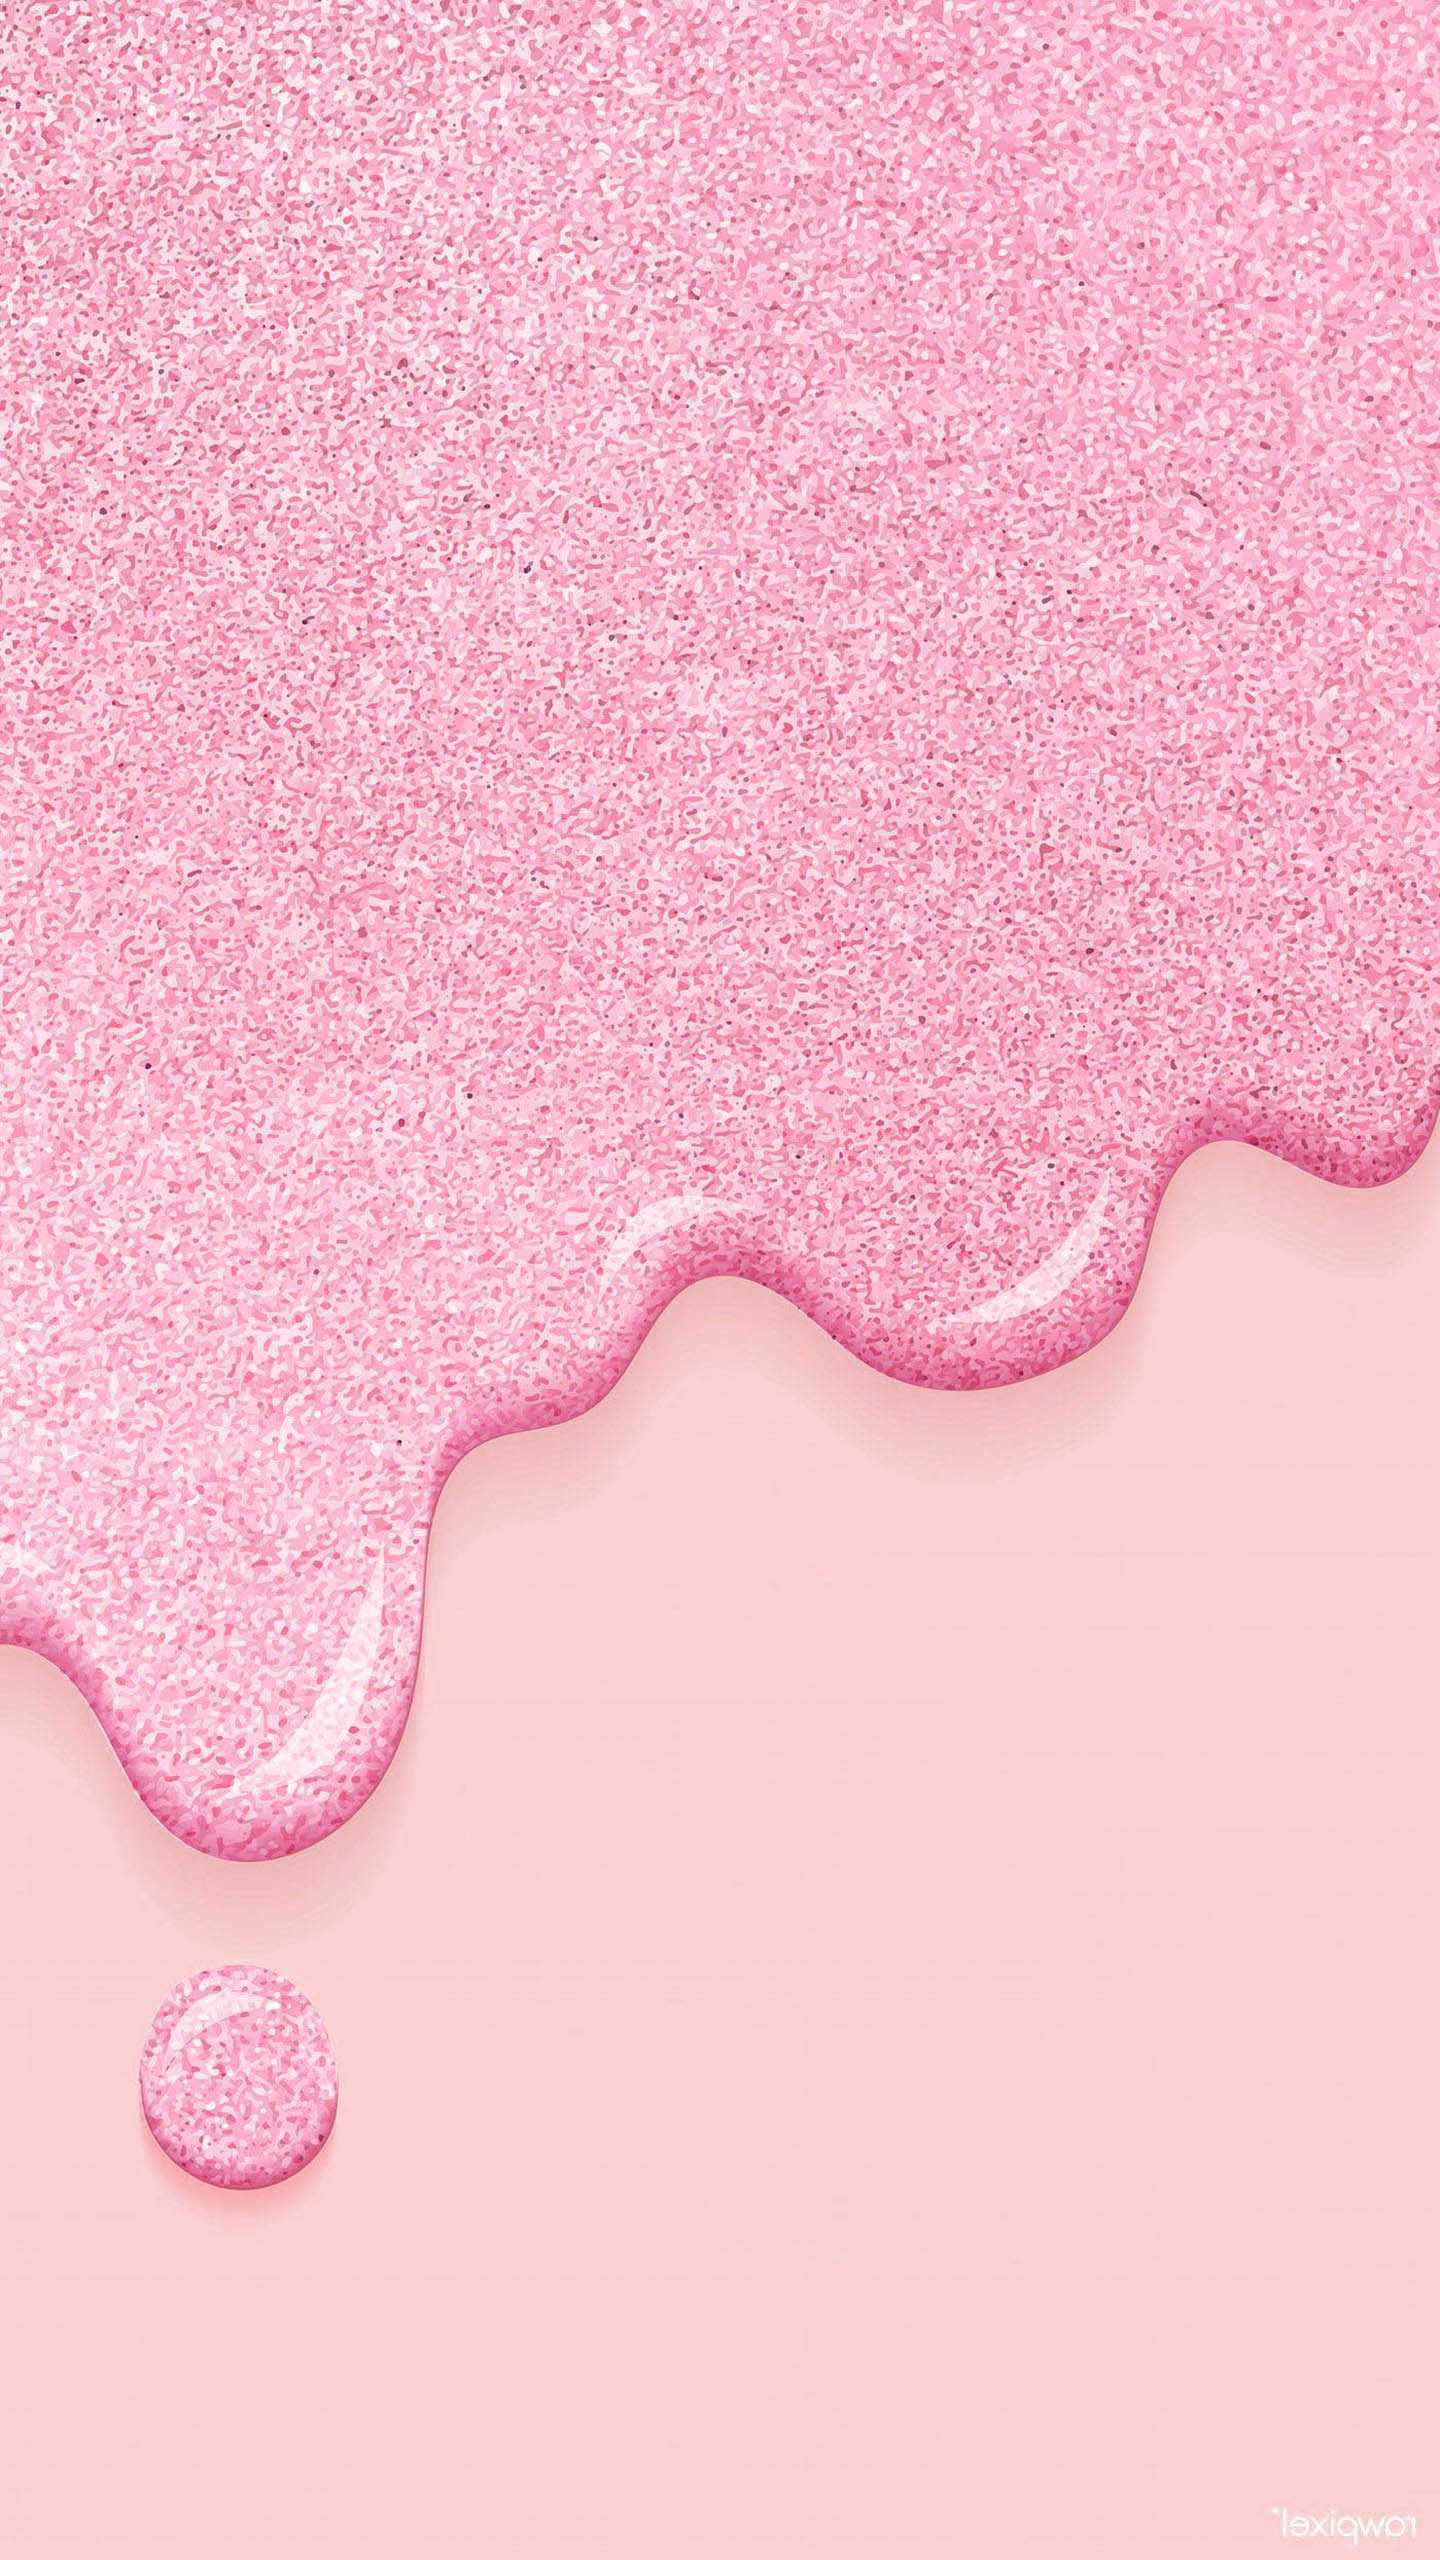 Pink Aesthetic Wallpaper - iXpap